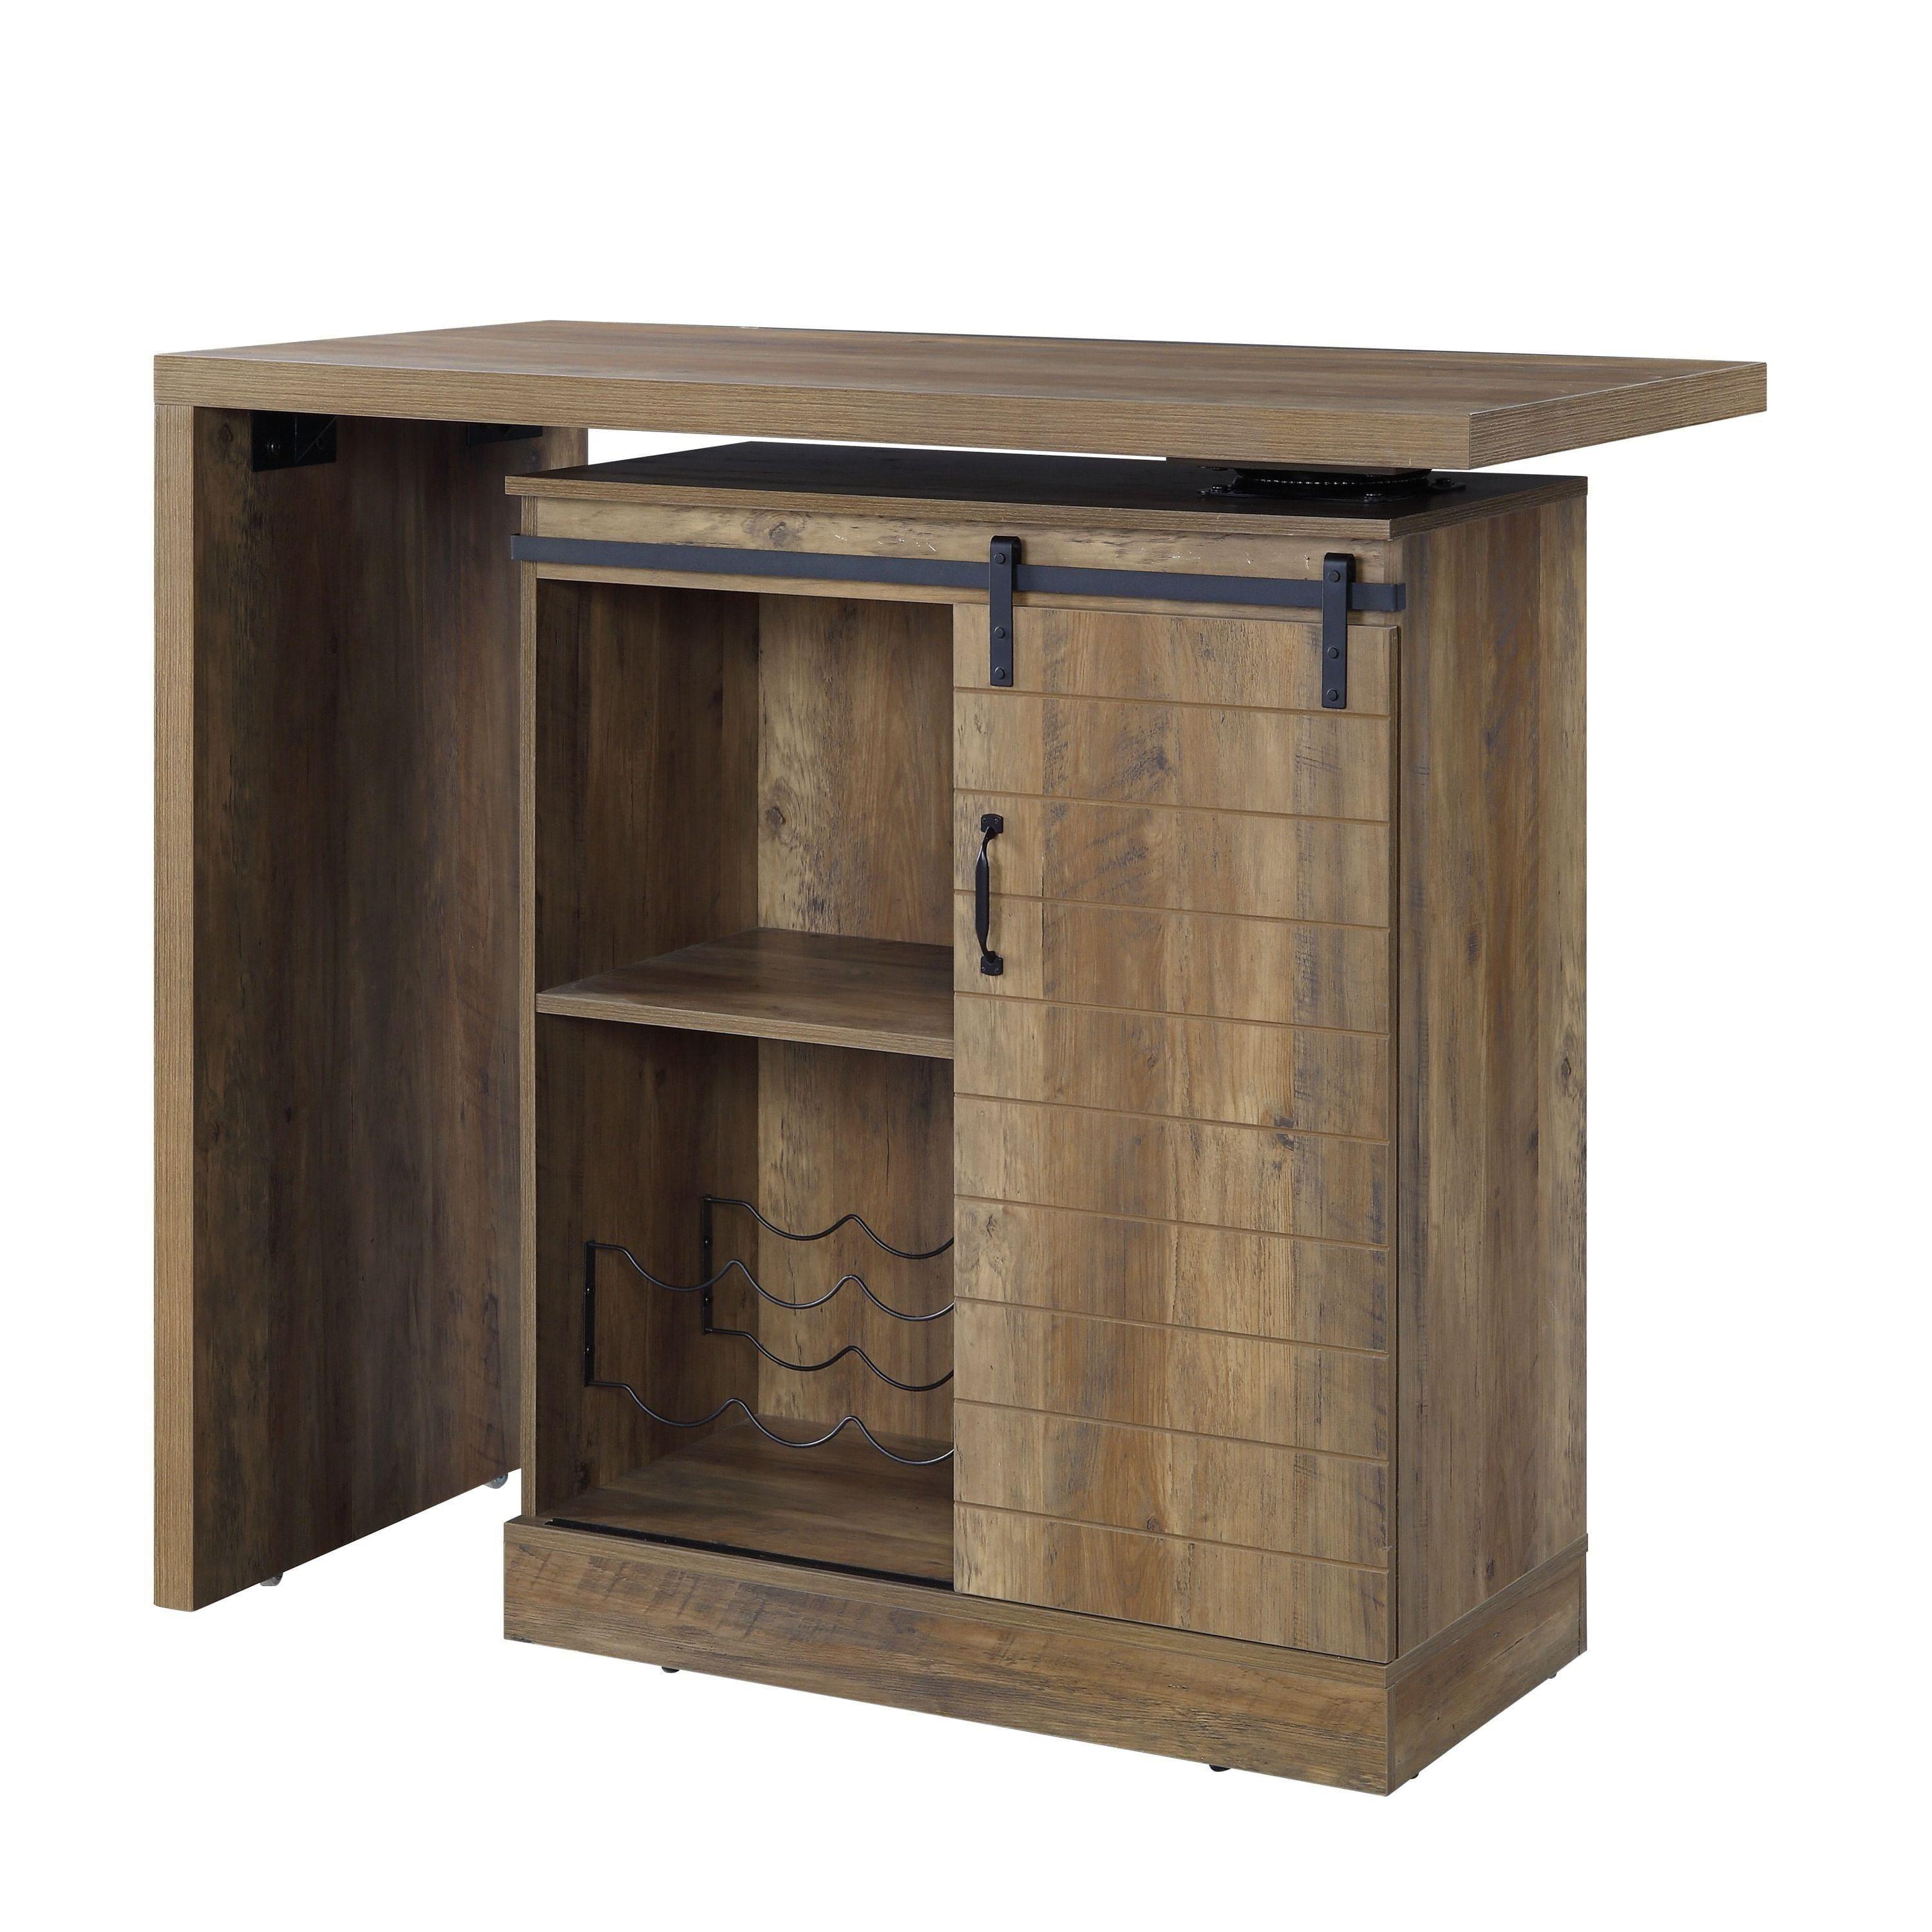 Shop ACME Quillon Bar Table, Rustic Oak Finish DN00153 Mademoiselle Home Decor